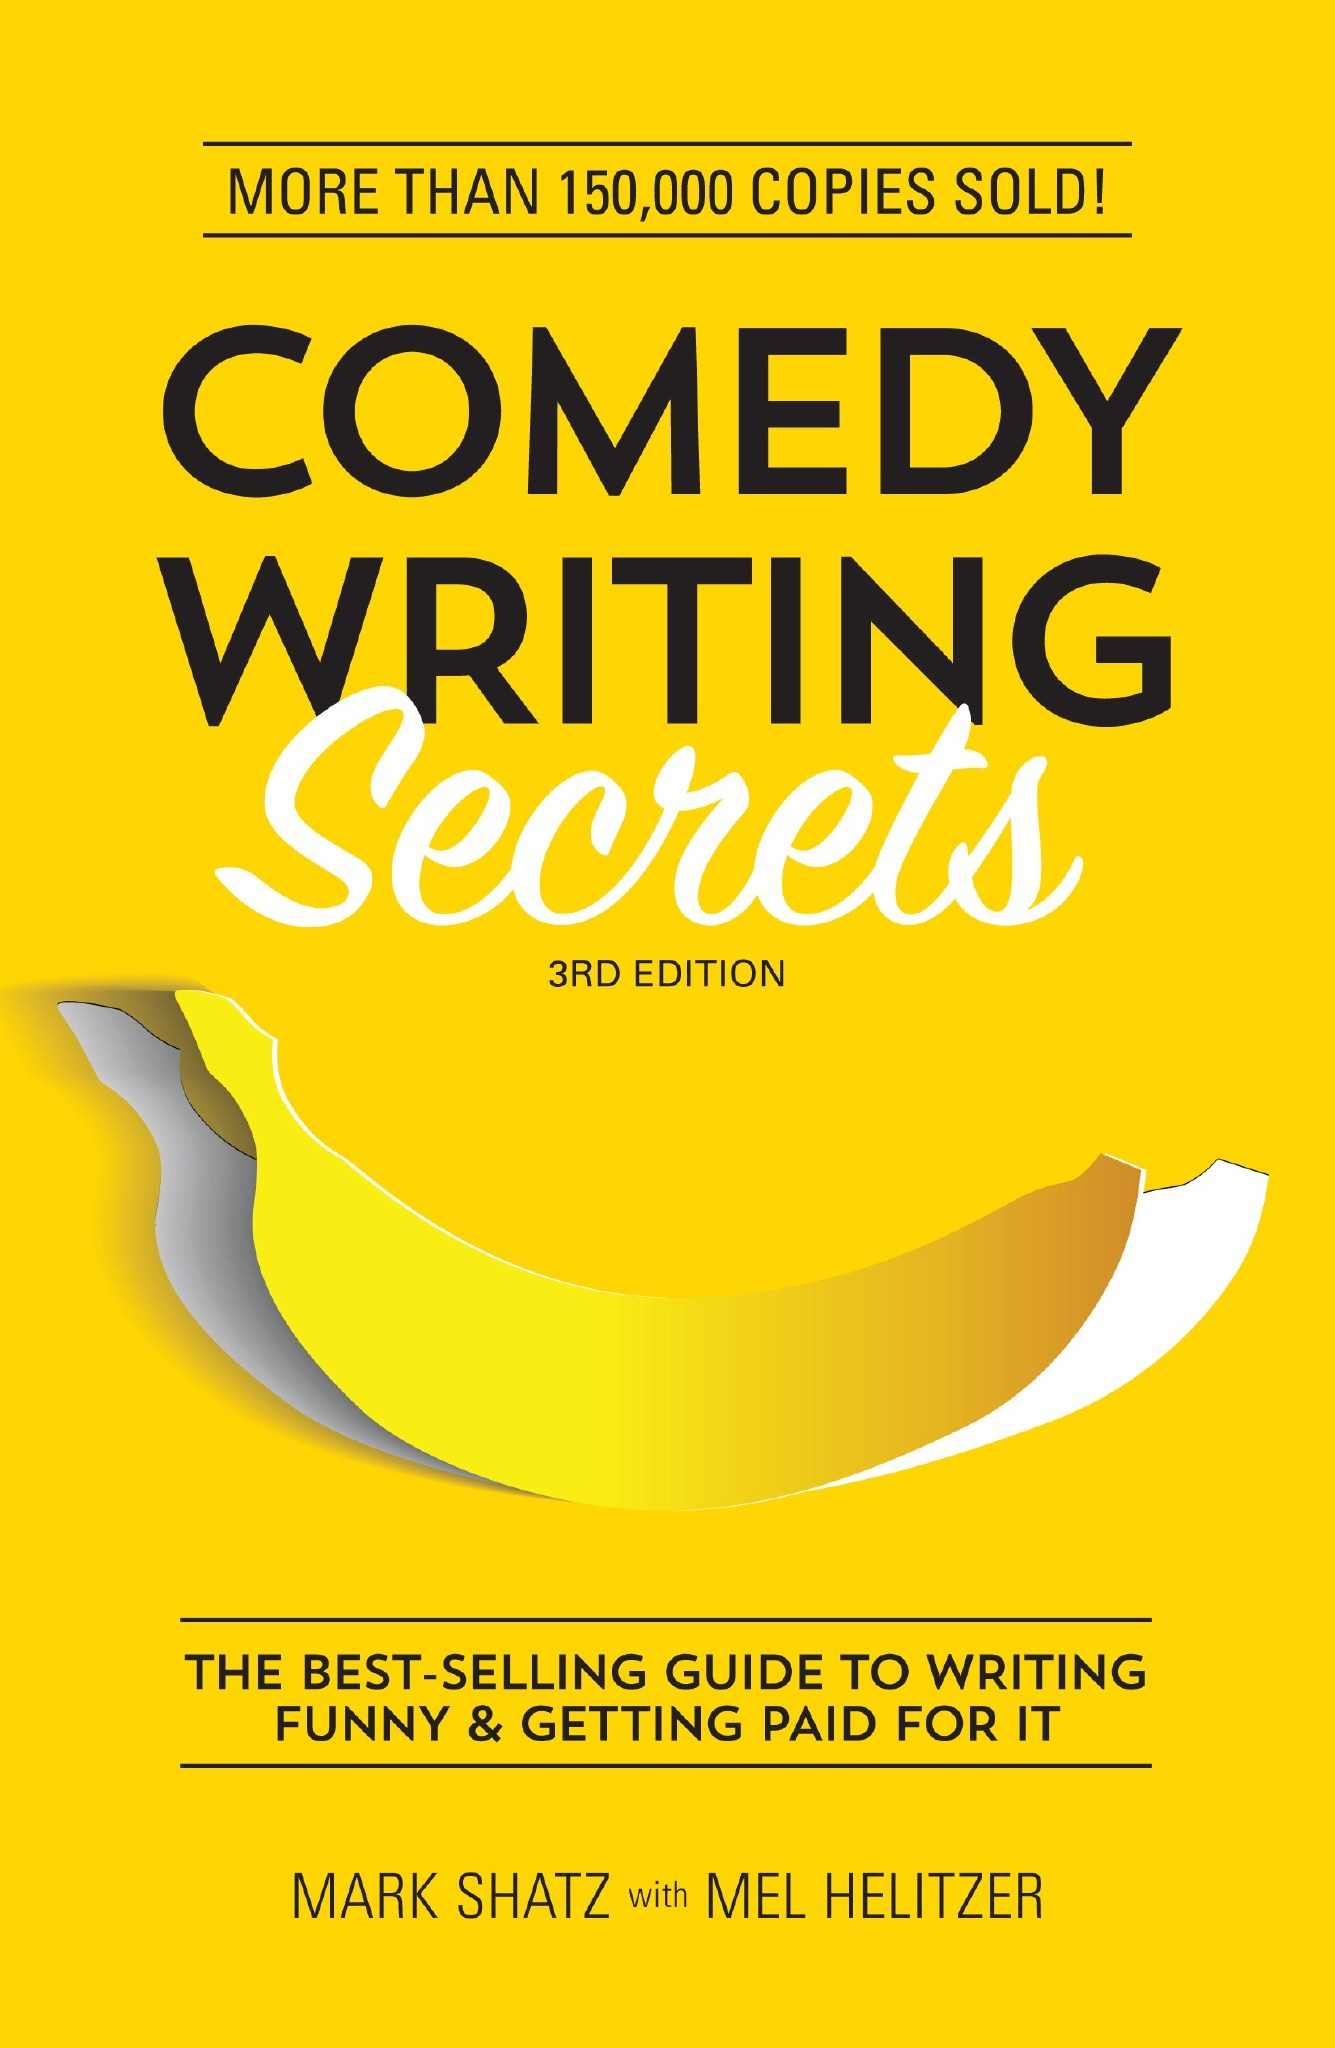 Comedy Writing Secrets - 3rd Edition